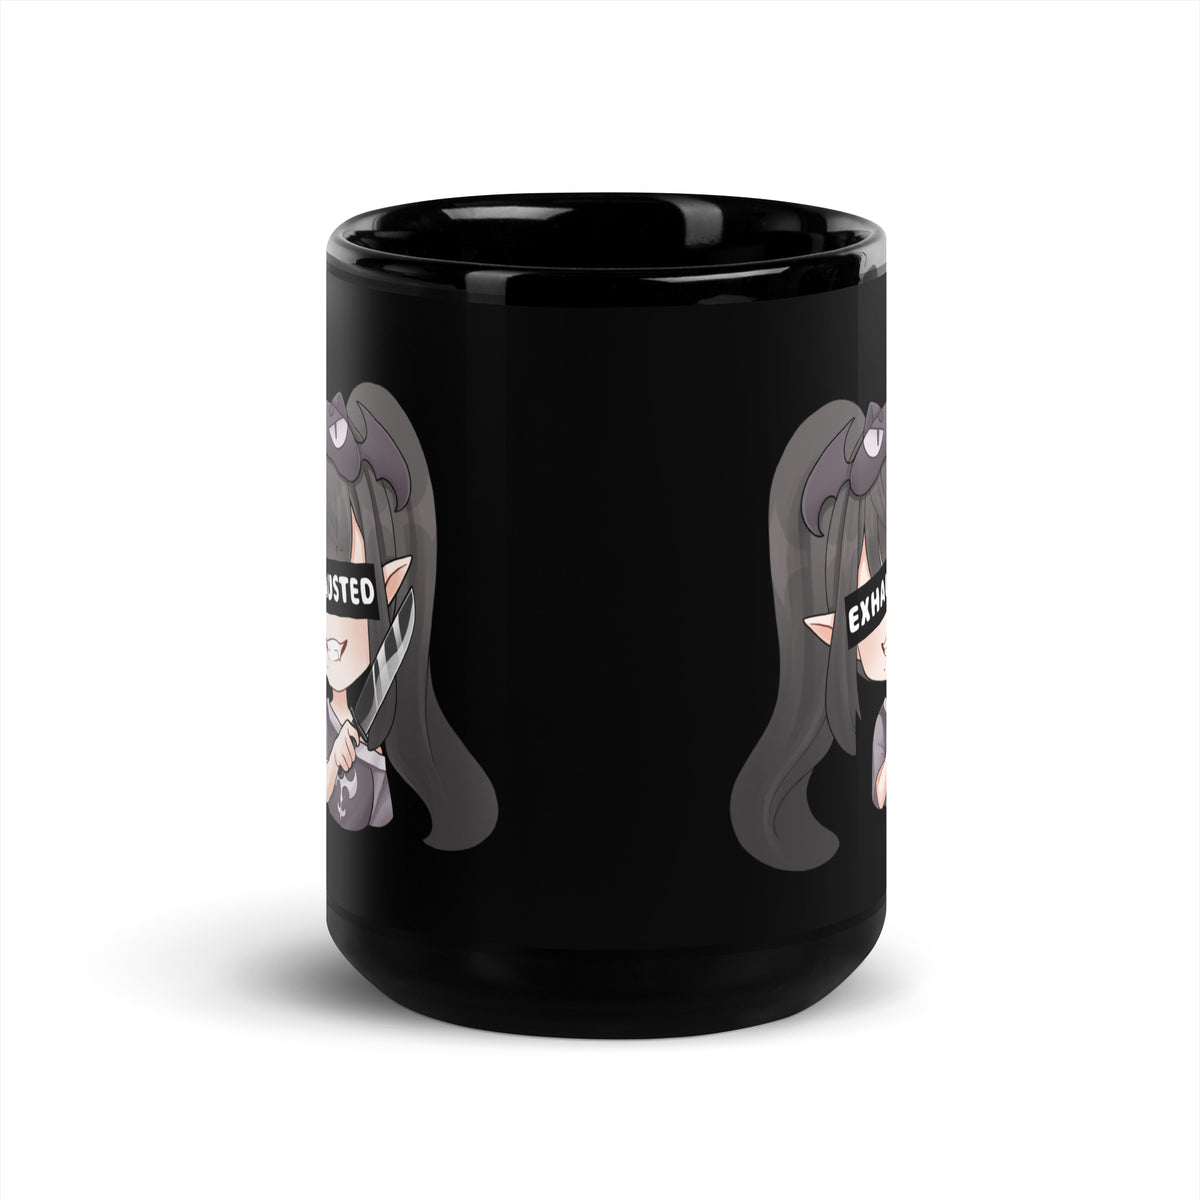 LAST CHANCE Morgana Mug